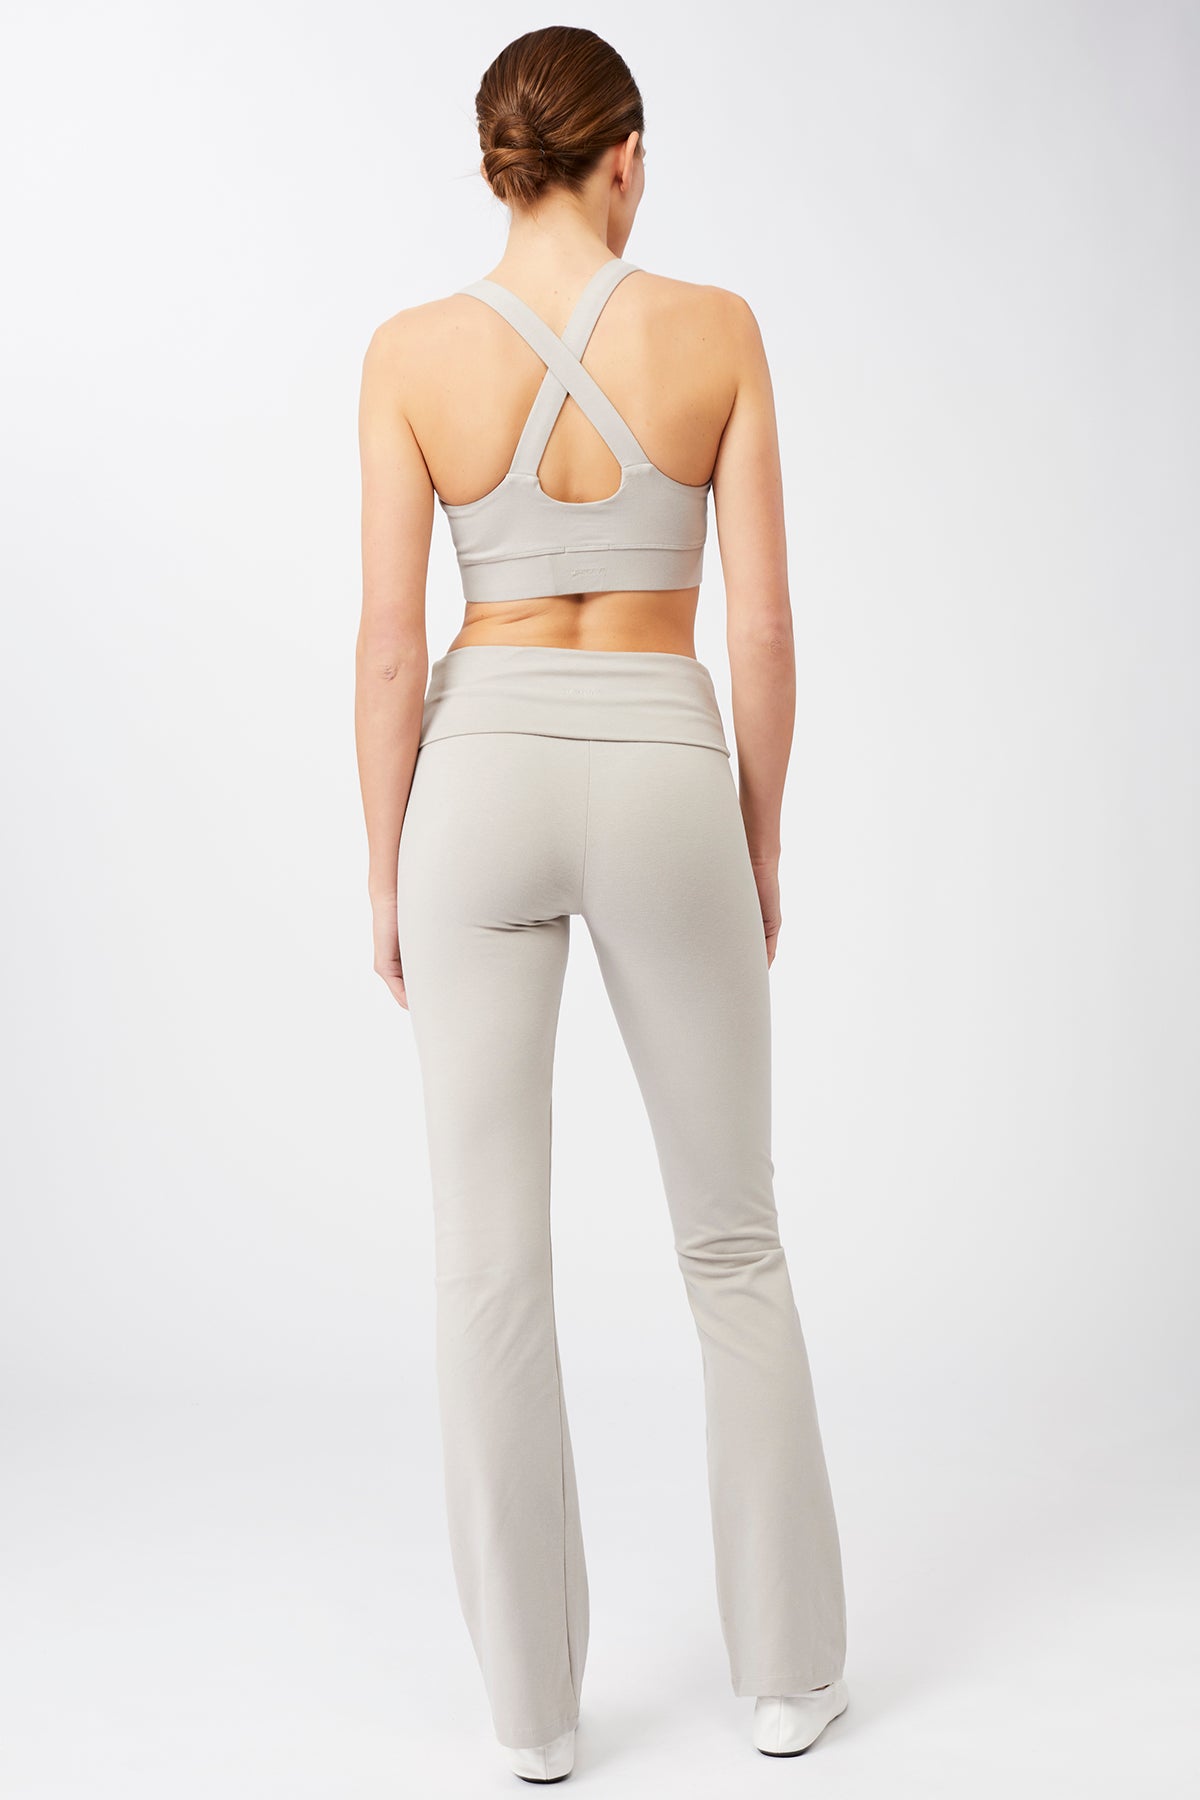 Mandala Yoga Bra Beige Outfit Rückseite - Extra Support Bra